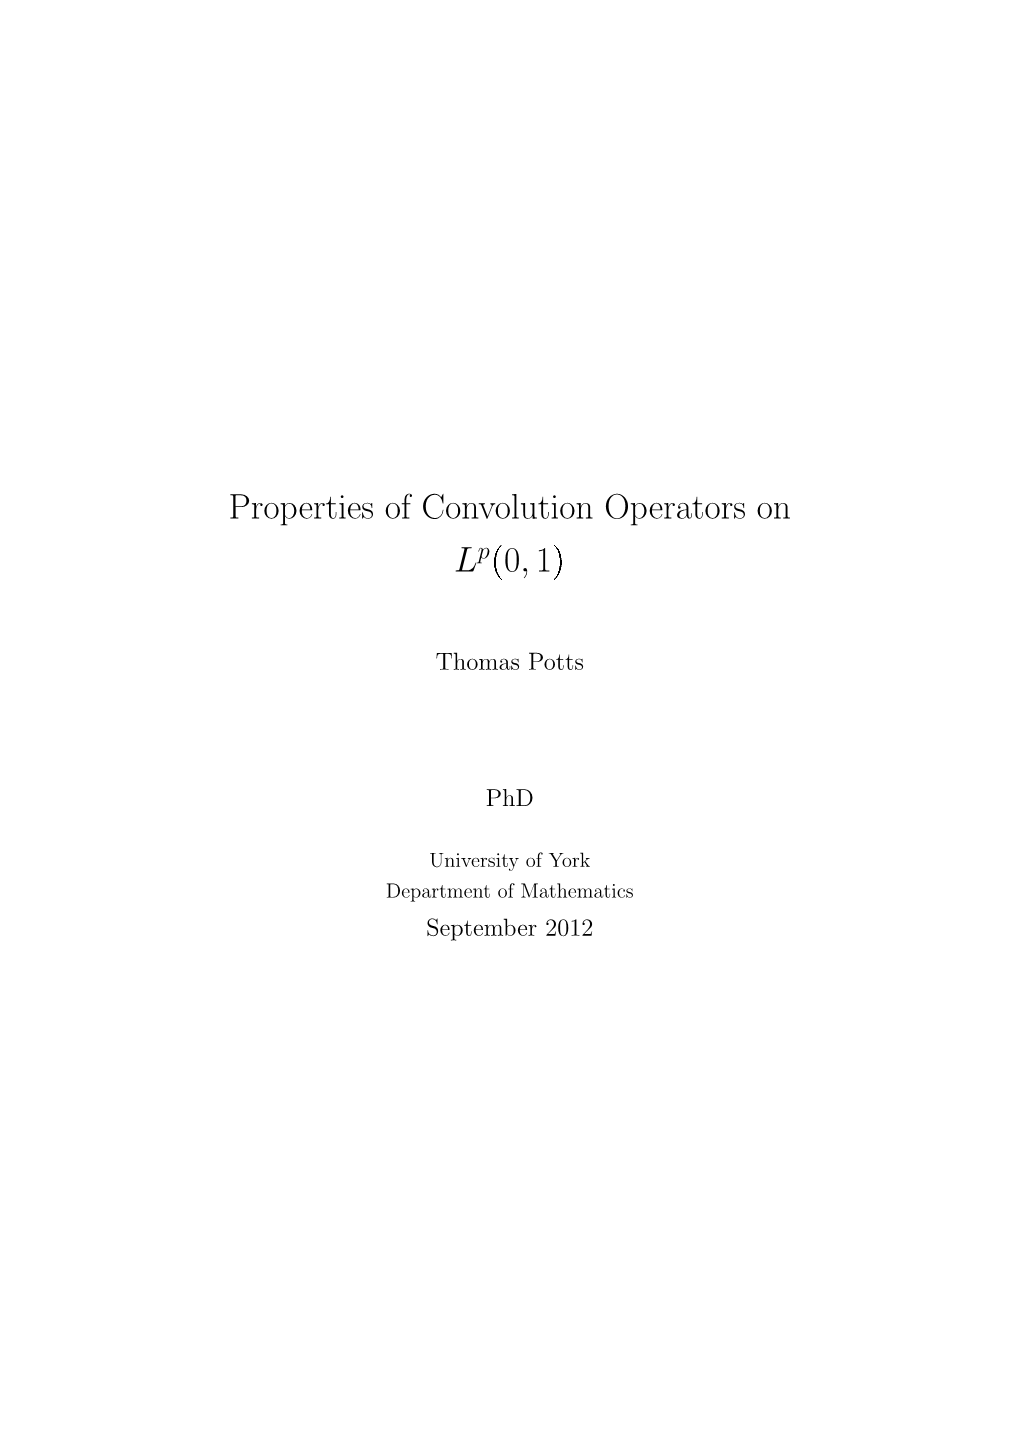 Properties of Convolution Operators on Lp(0,1)